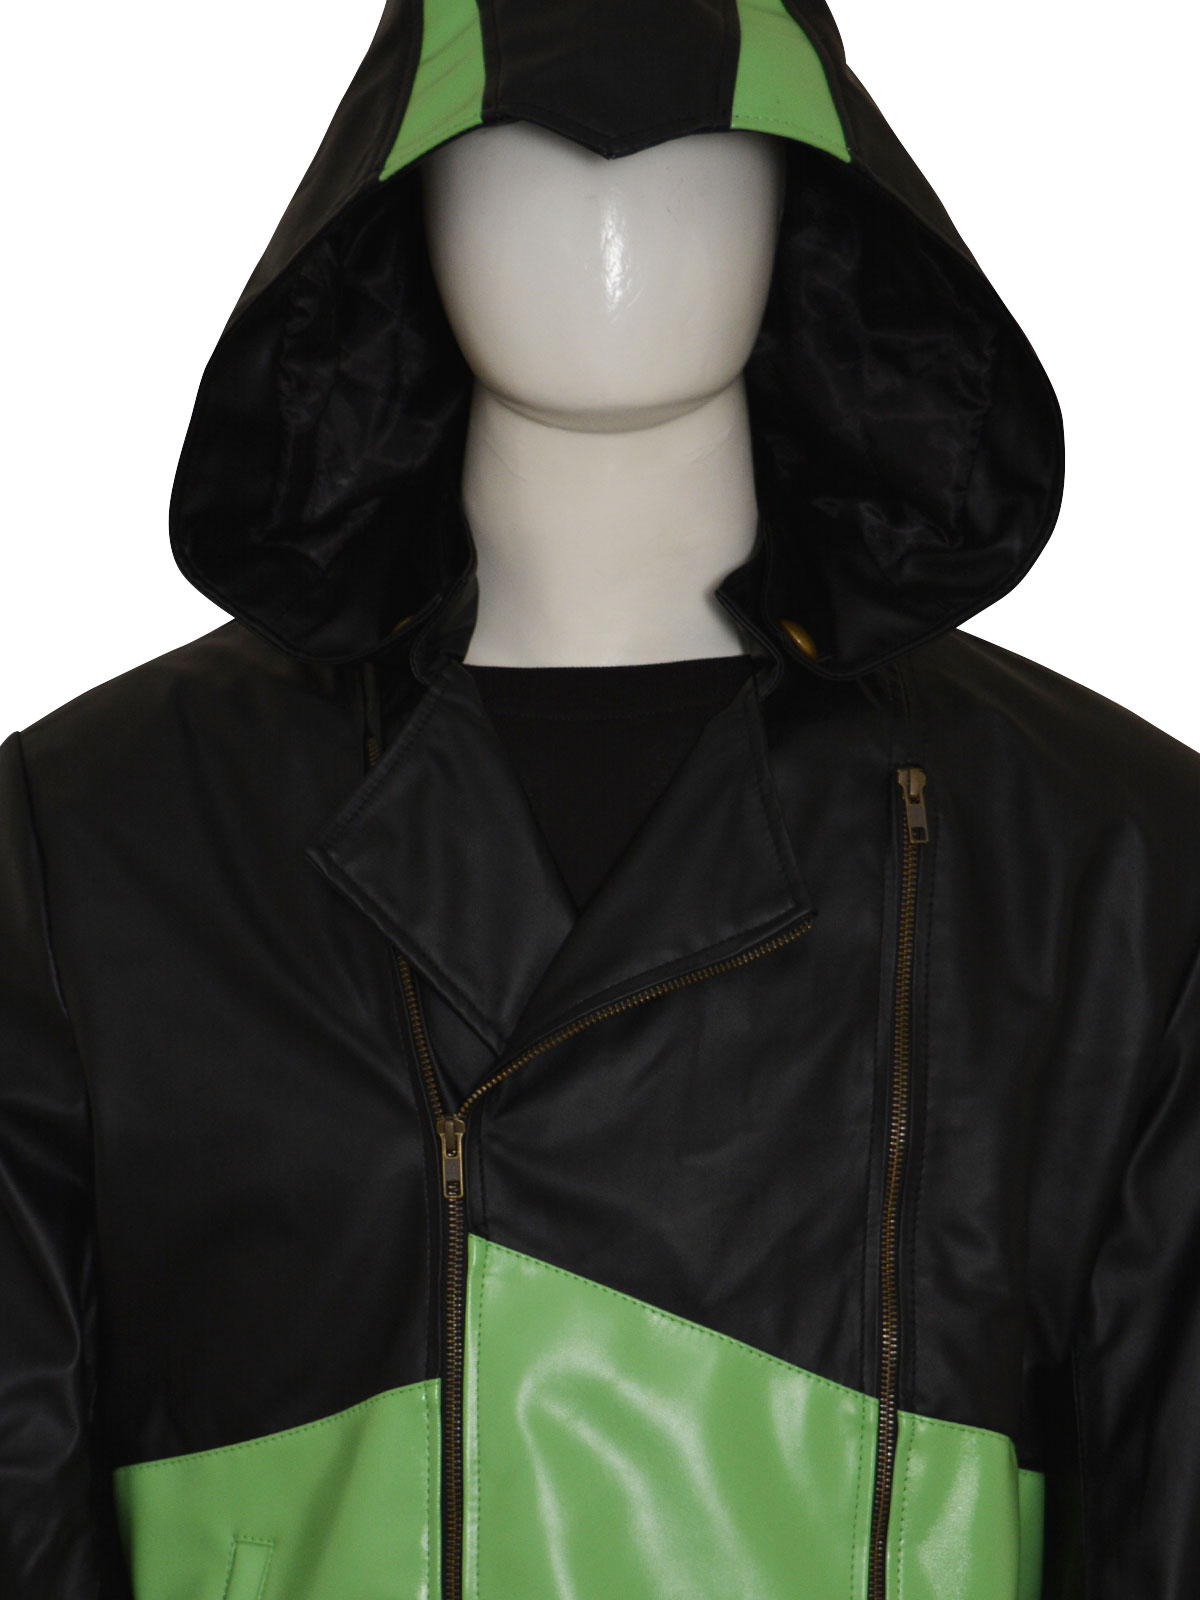 Assassins-Creed-3-Leather-Jacket